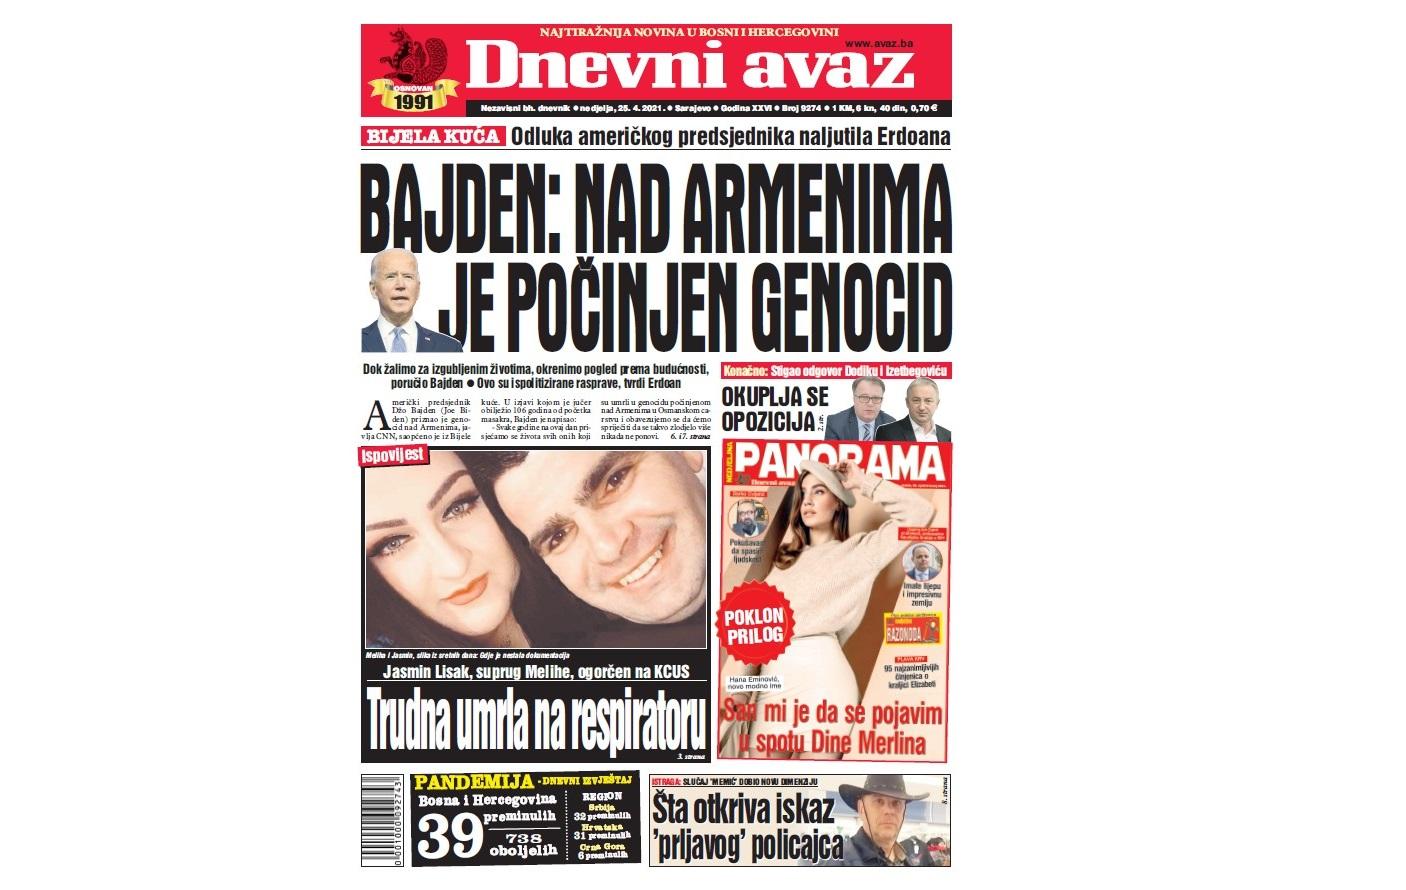 Danas u "Dnevnom avazu" čitajte: Bajden: Nad Armenima je počinjen genocid